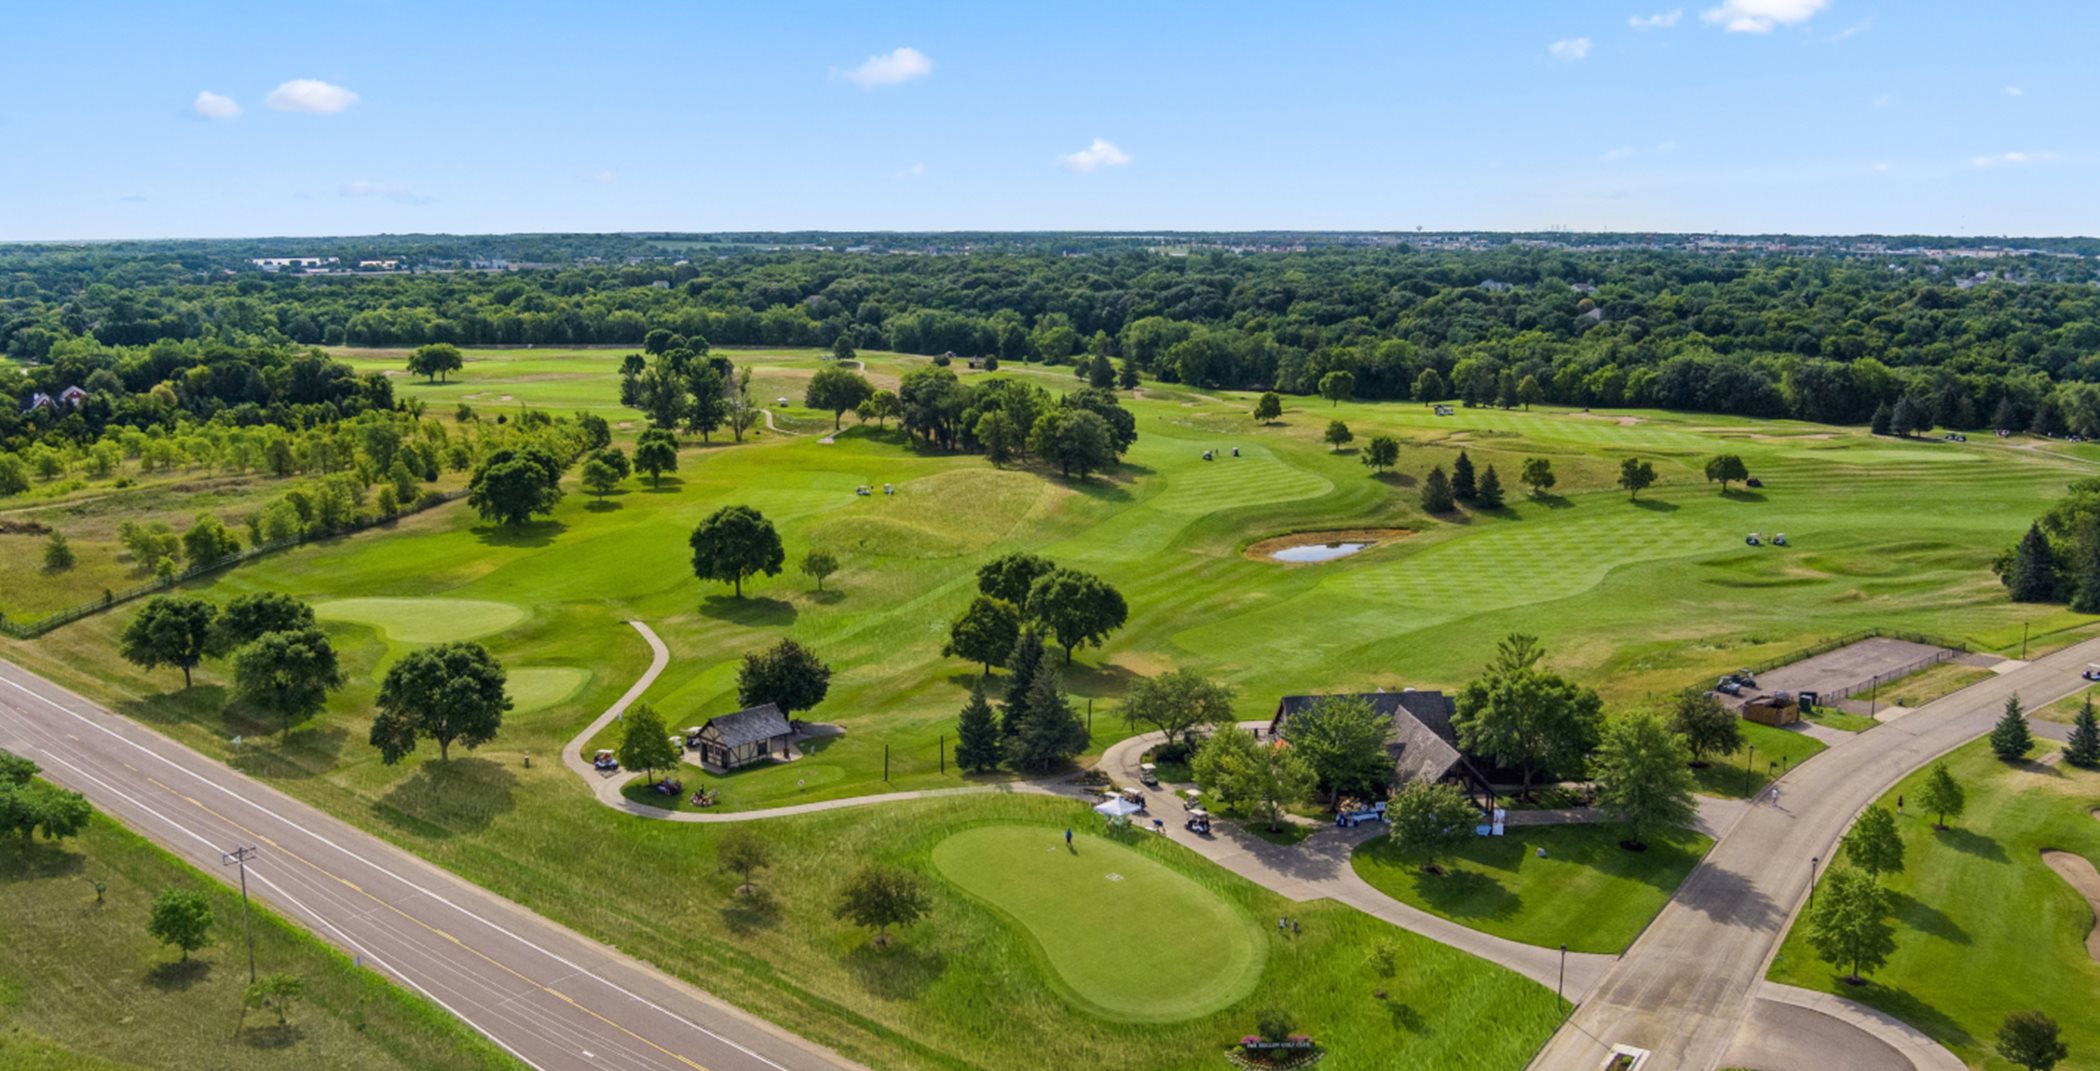 Fox Hollow Golf Club and Cedar Creek Golf Course